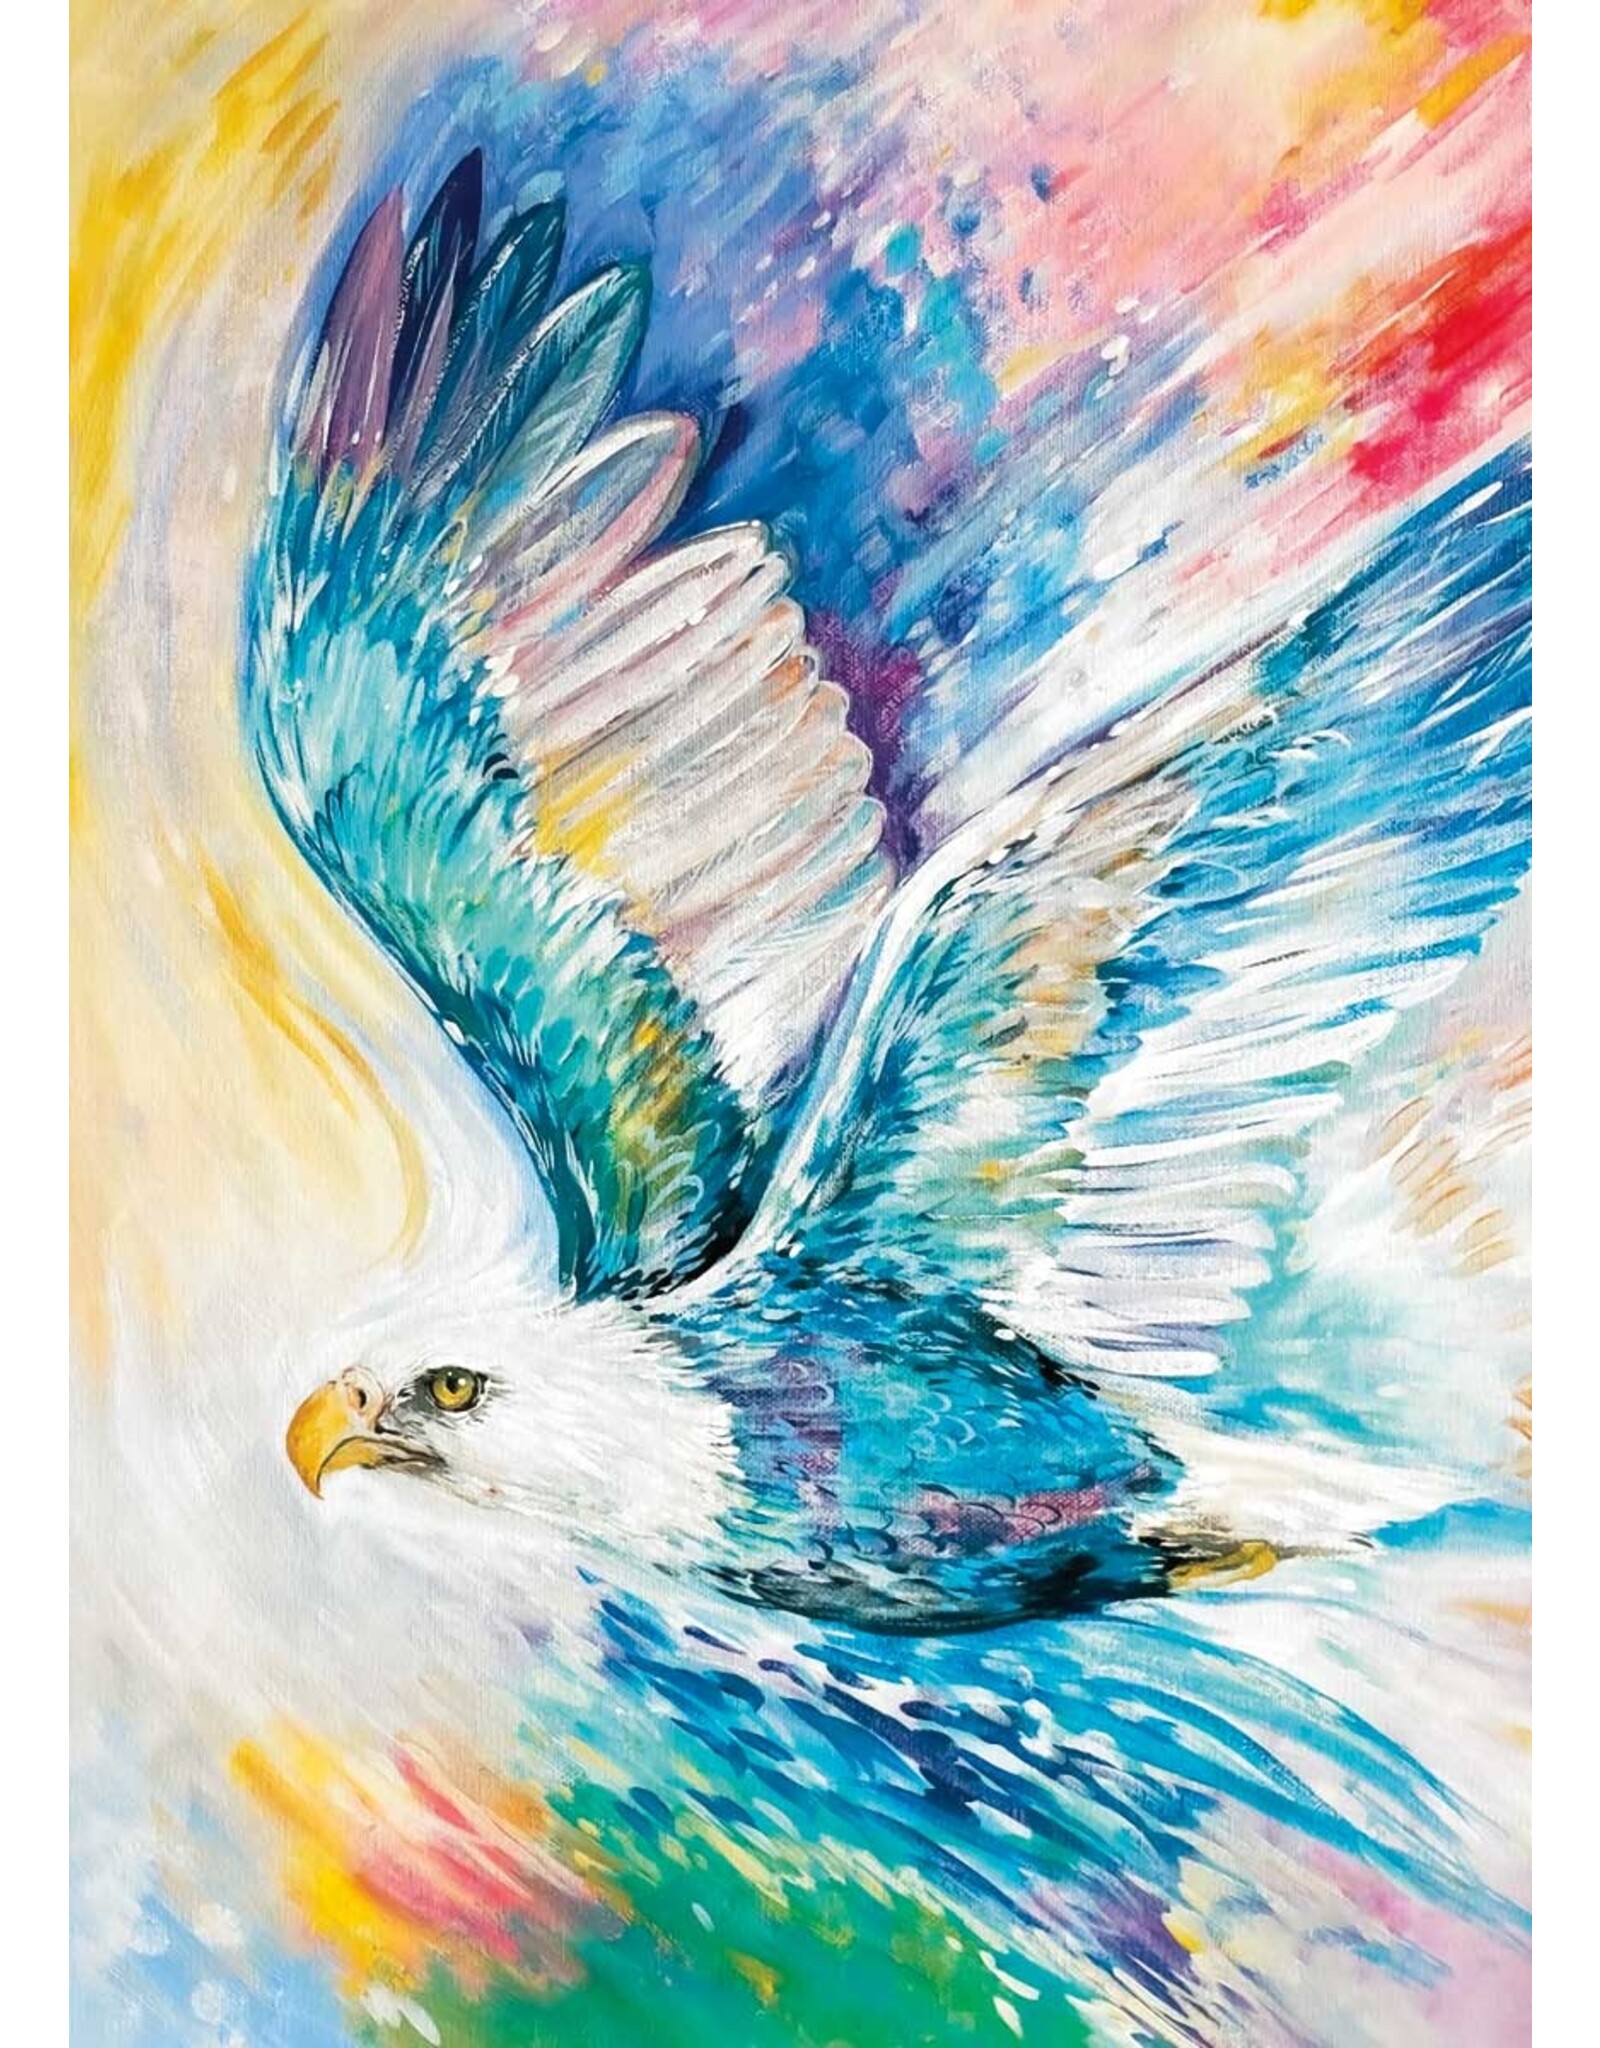 Toile Eagle of Many Colours by Carla Joseph